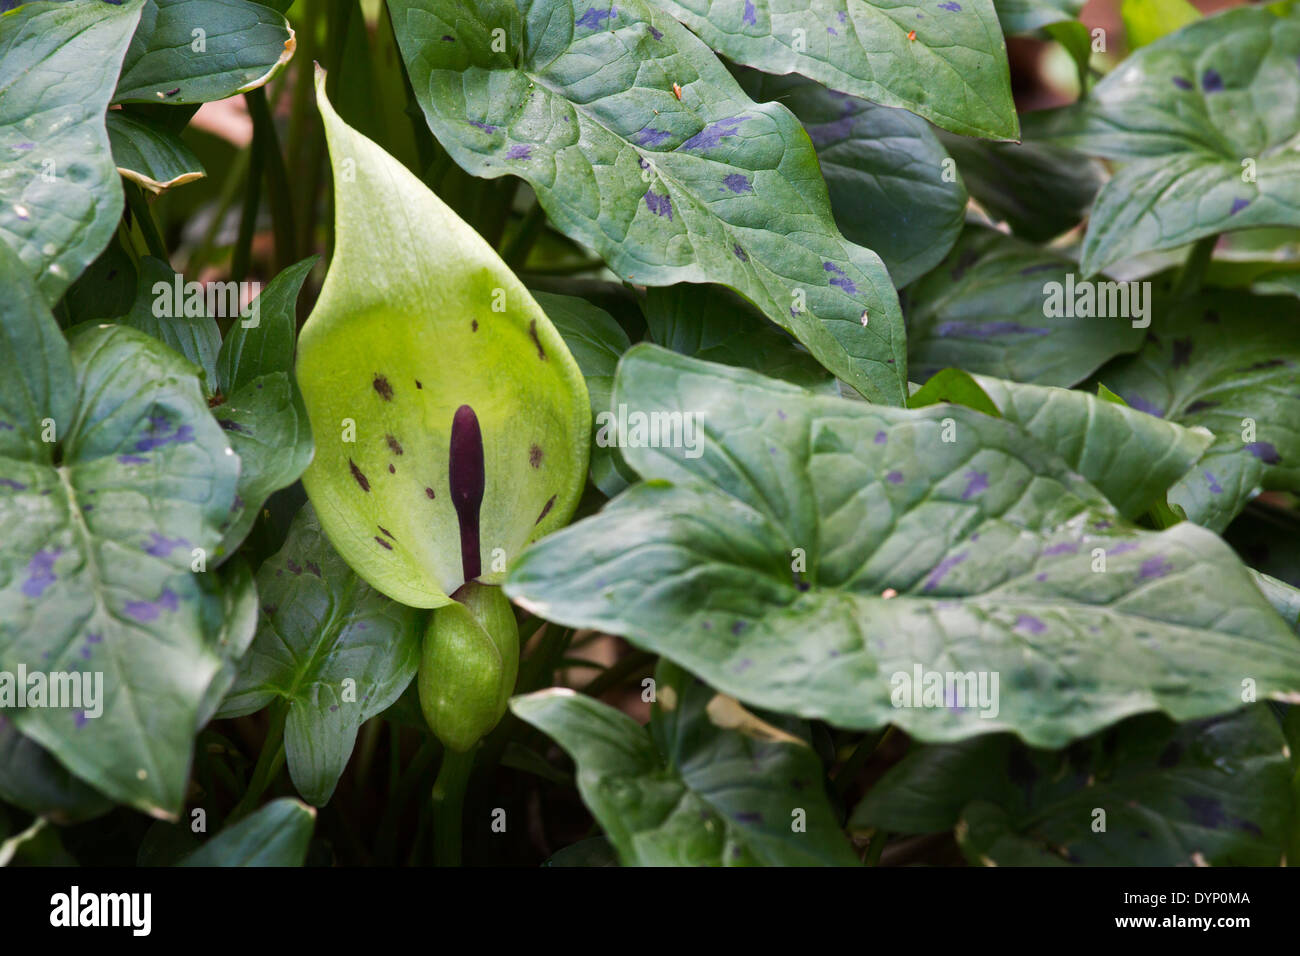 Arum sauvage / cuckoo pint (Arum maculatum) en fleurs Banque D'Images